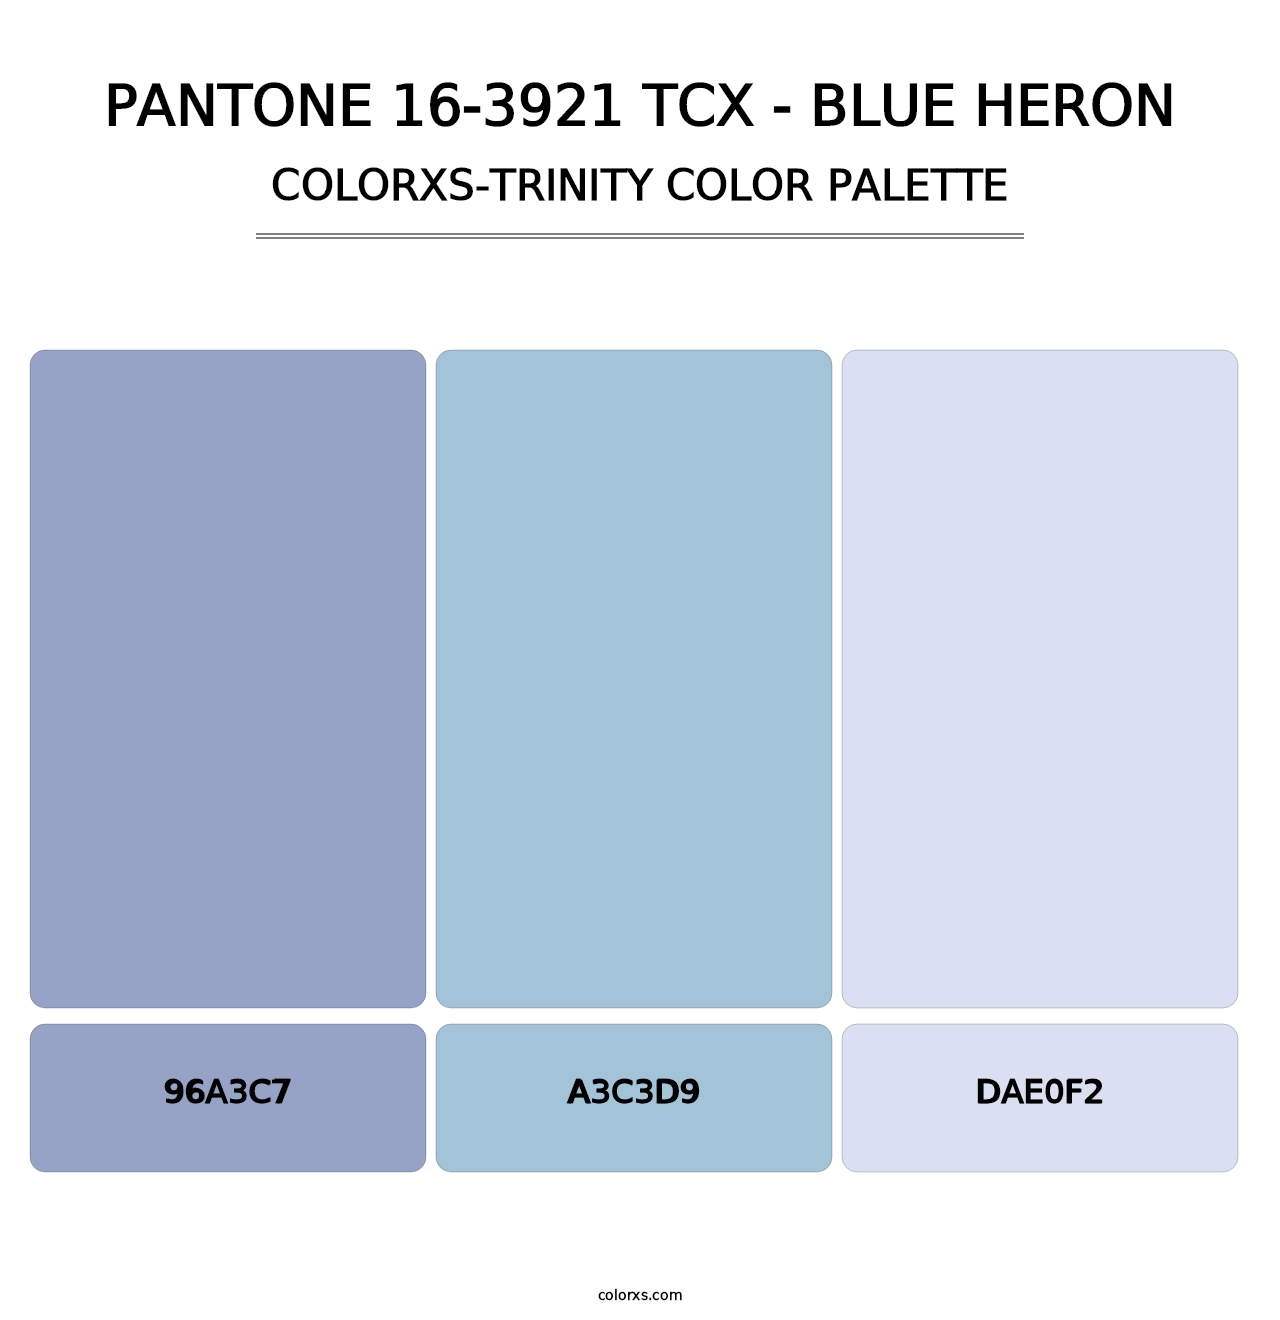 PANTONE 16-3921 TCX - Blue Heron - Colorxs Trinity Palette